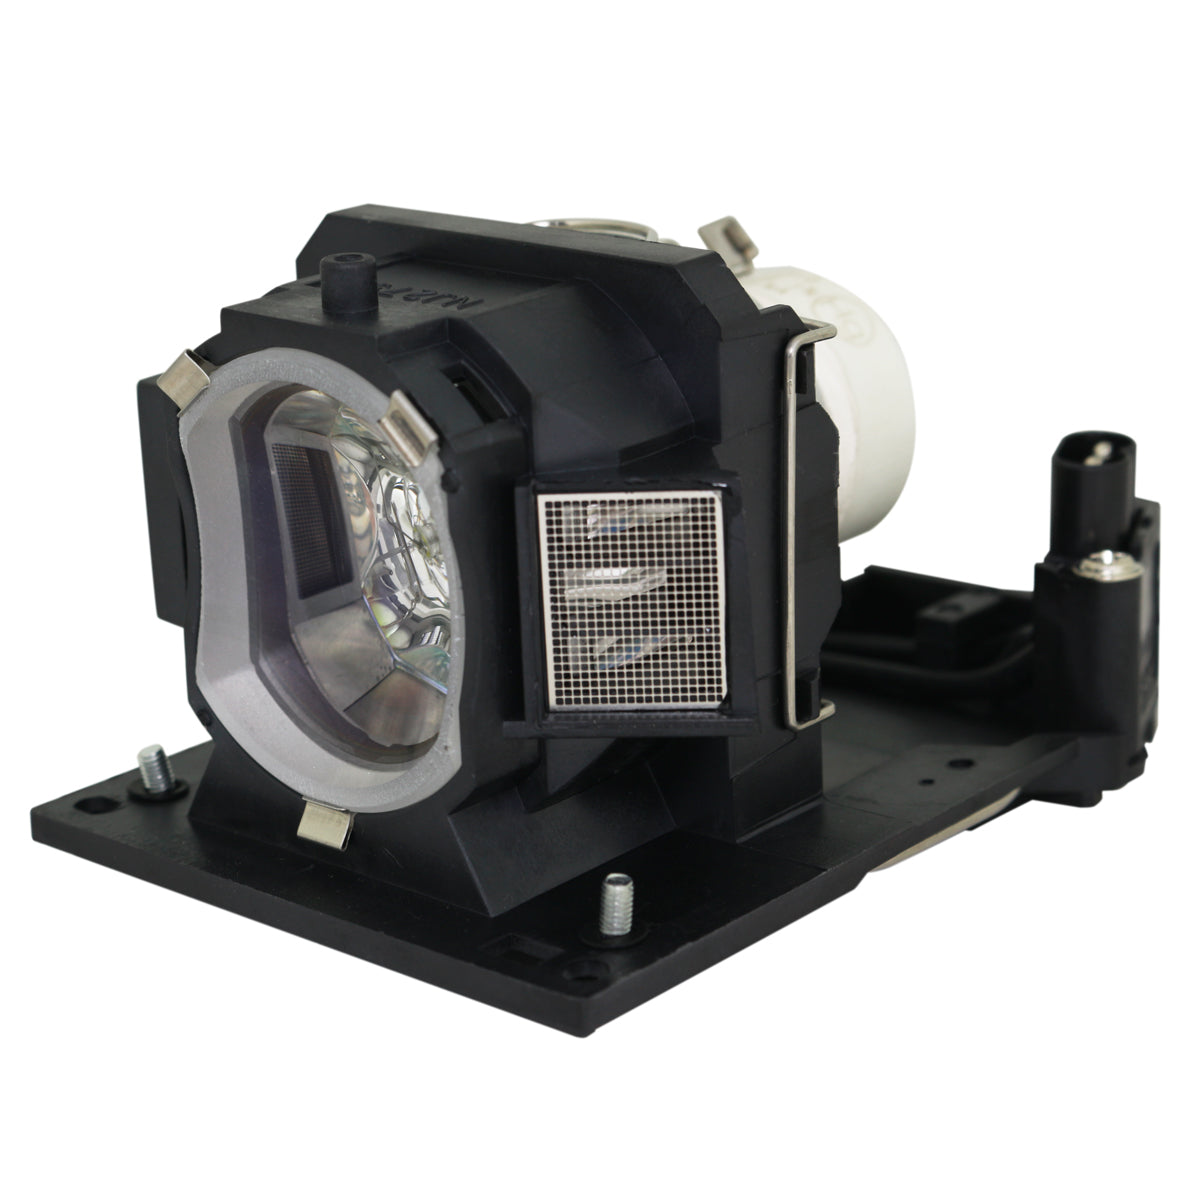 Hitachi DT01511 Ushio Projector Lamp Module